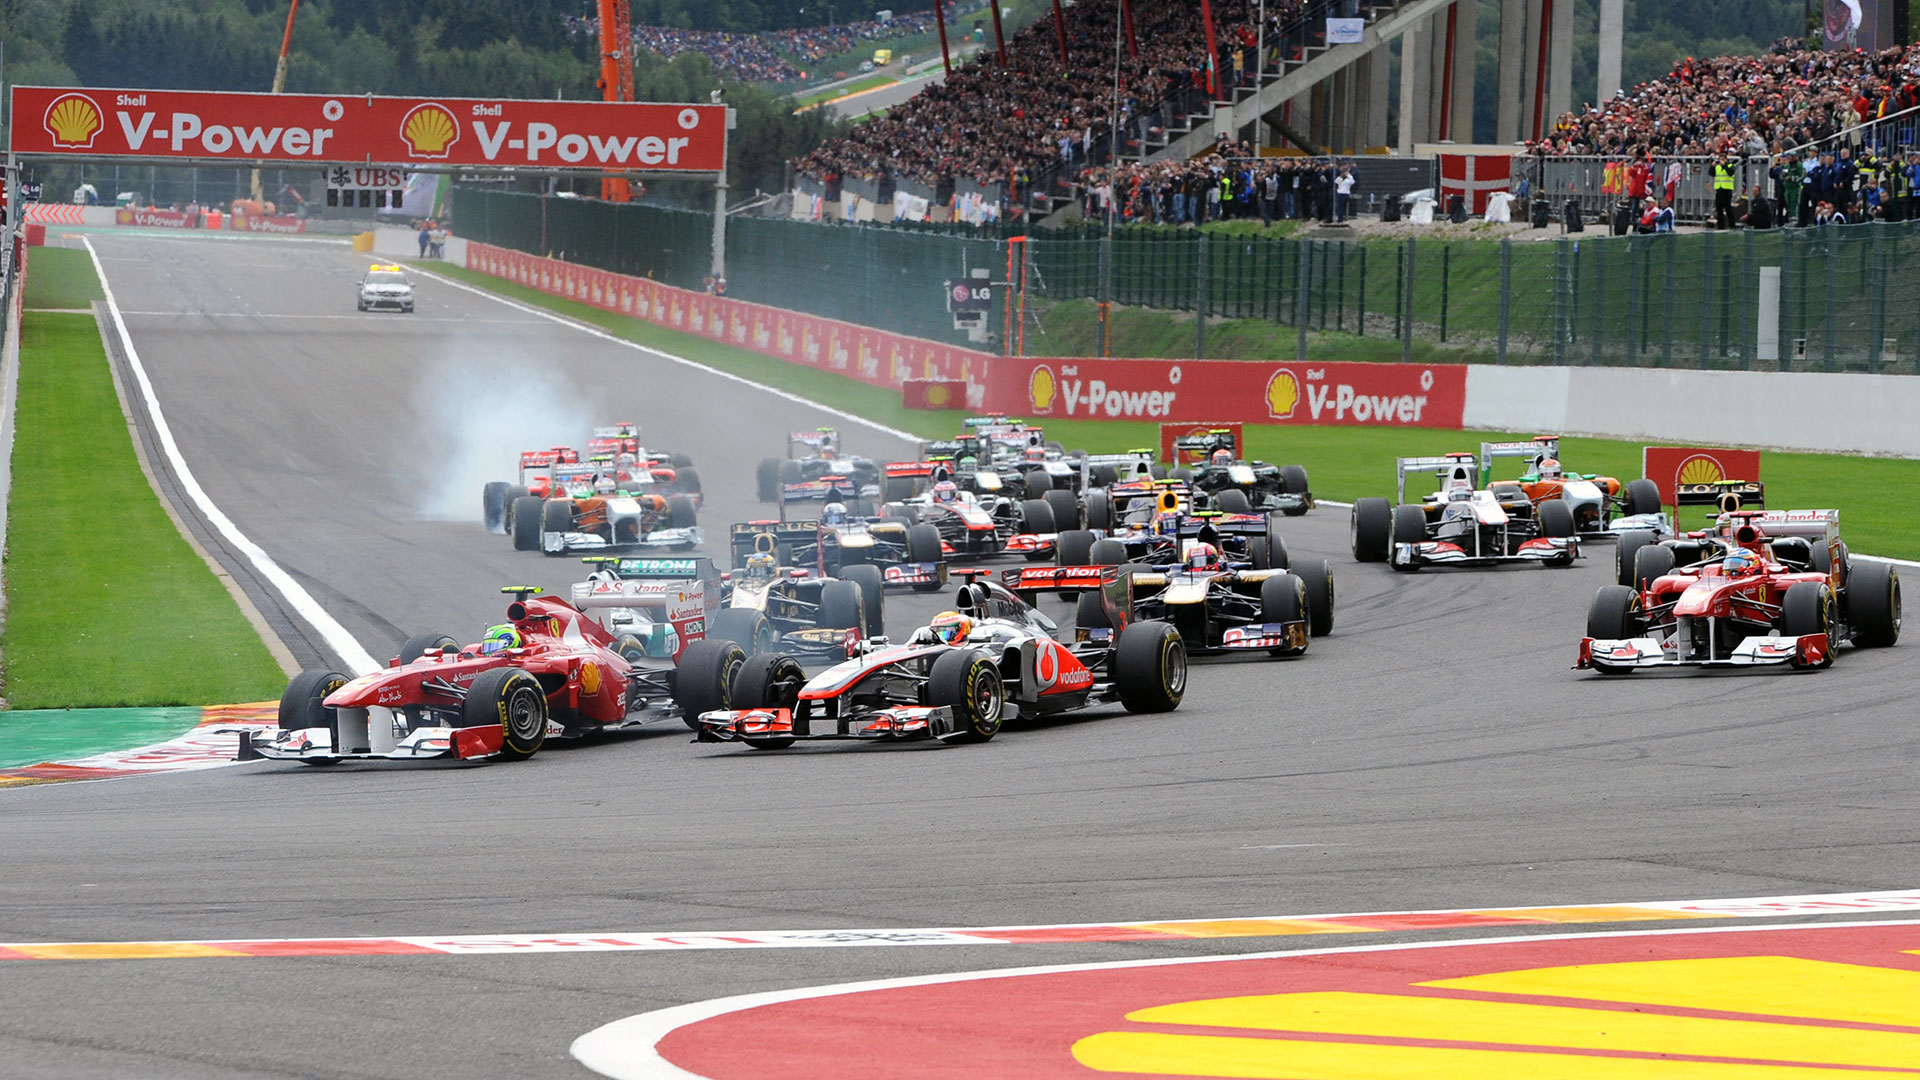 HD Wallpapers 2011 Formula 1 Grand Prix of Belgium | F1-Fansite.com